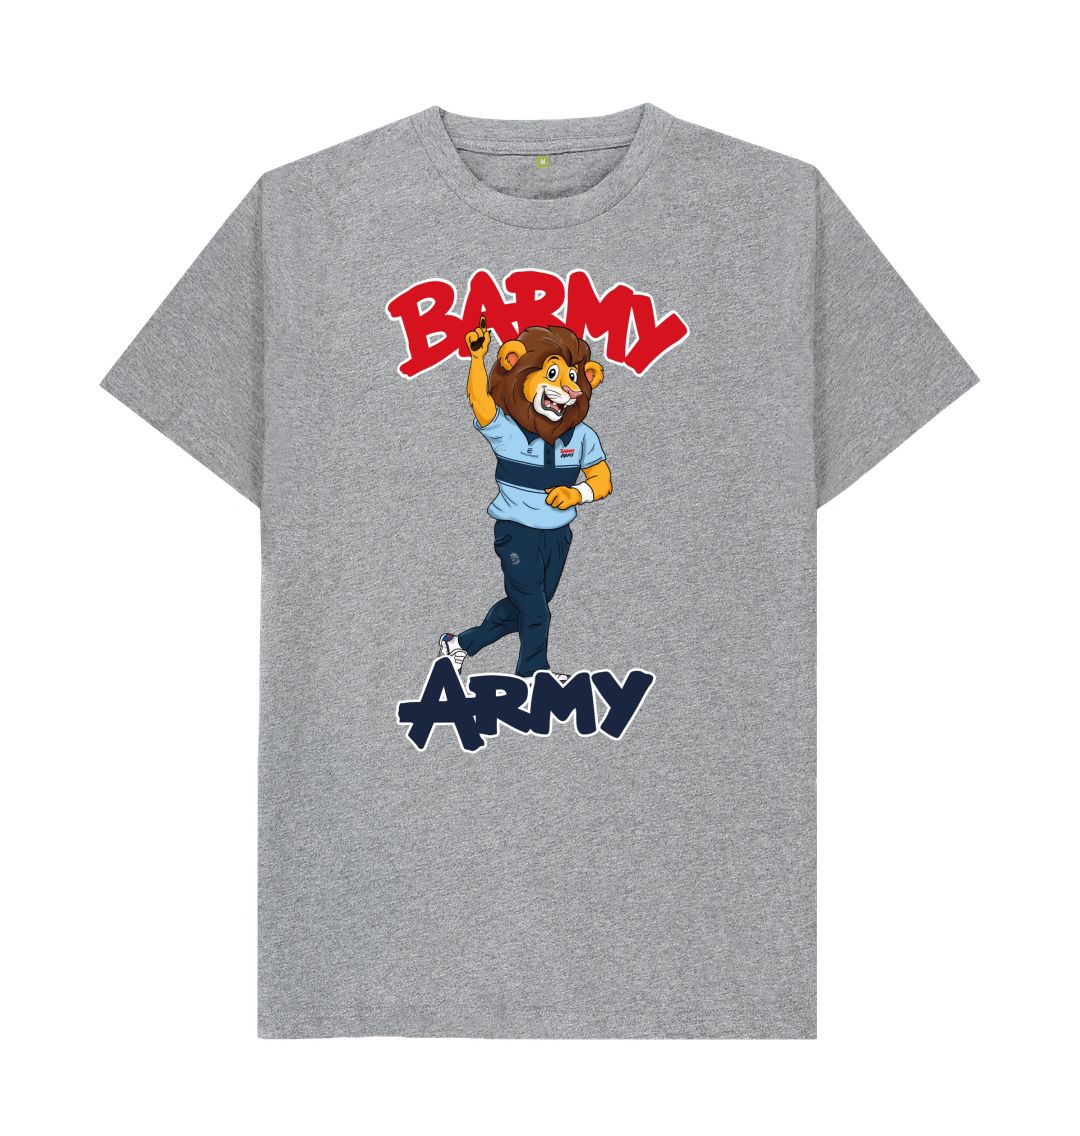 Athletic Grey Barmy Army Mascot Send Off Tees - Men's